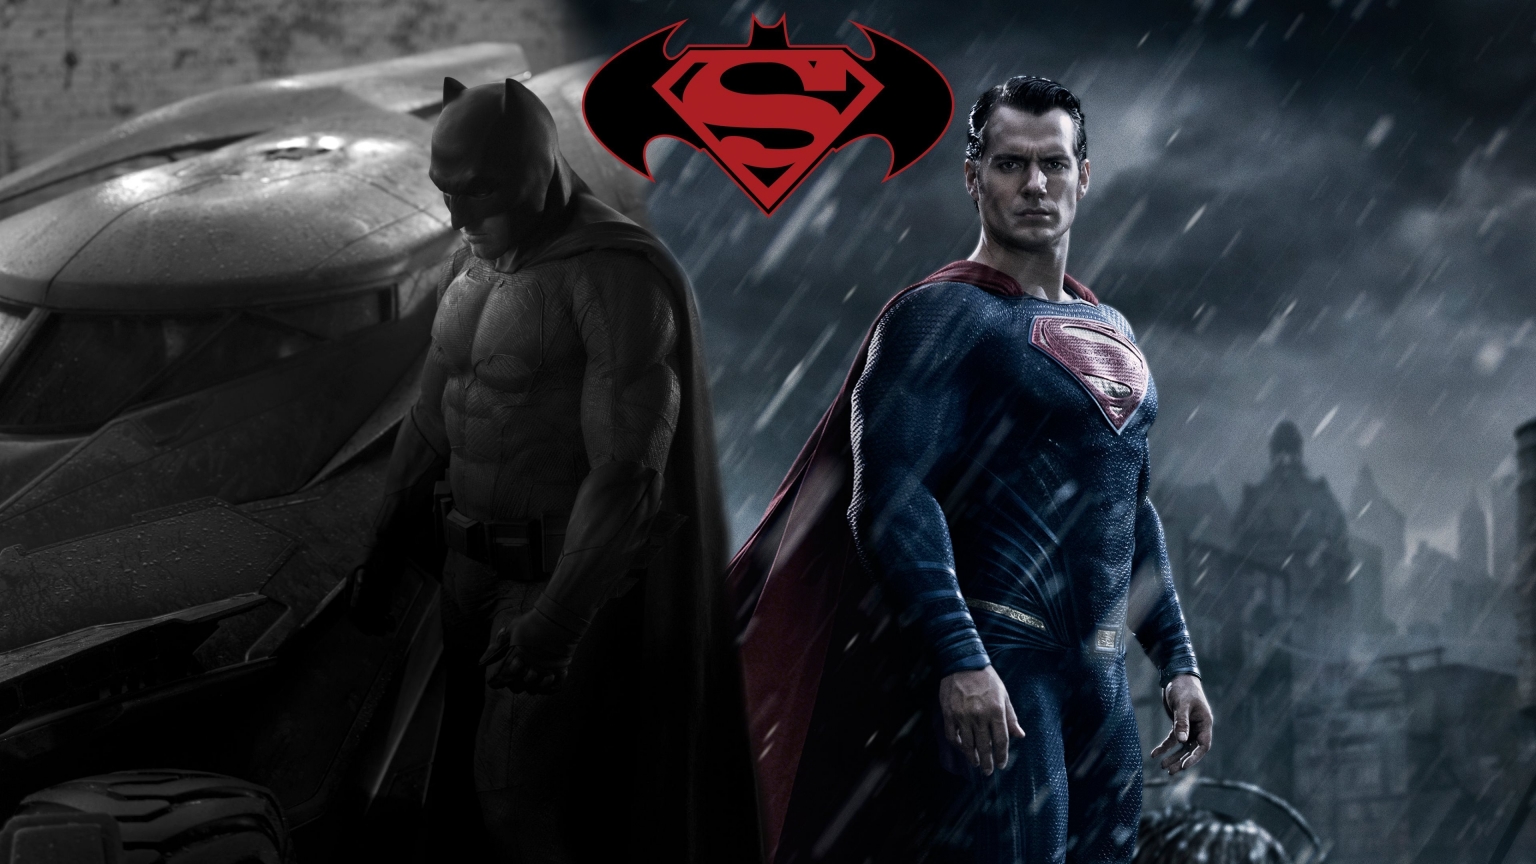 Batman vs Superman Fan Art for 1536 x 864 HDTV resolution